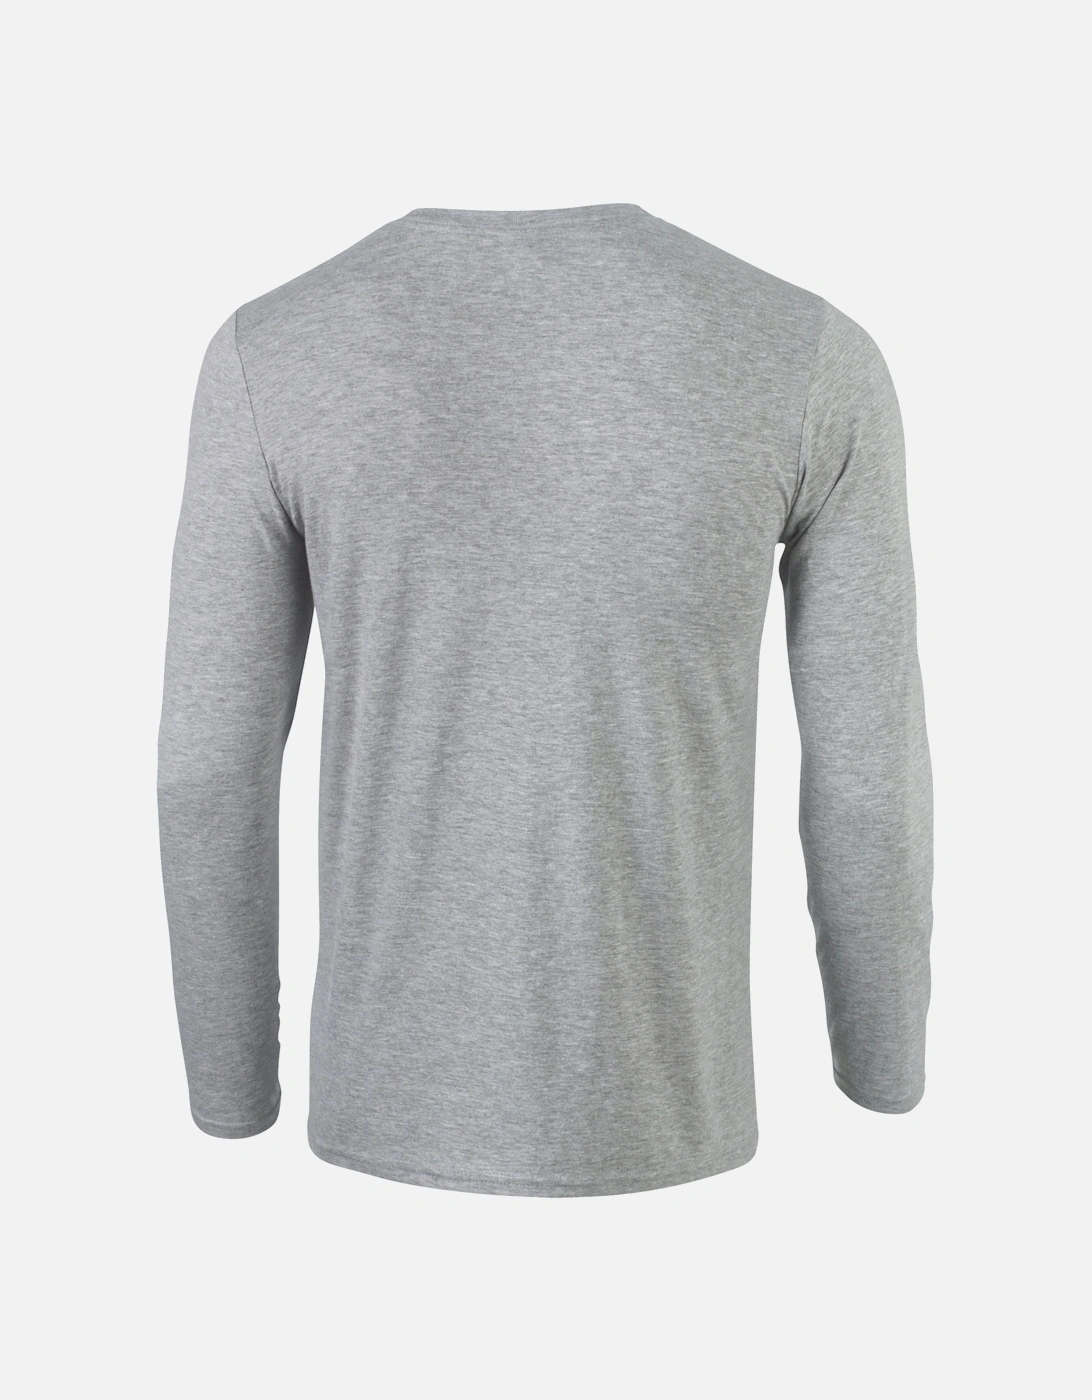 Unisex Adult Softstyle Polycotton Long-Sleeved T-Shirt